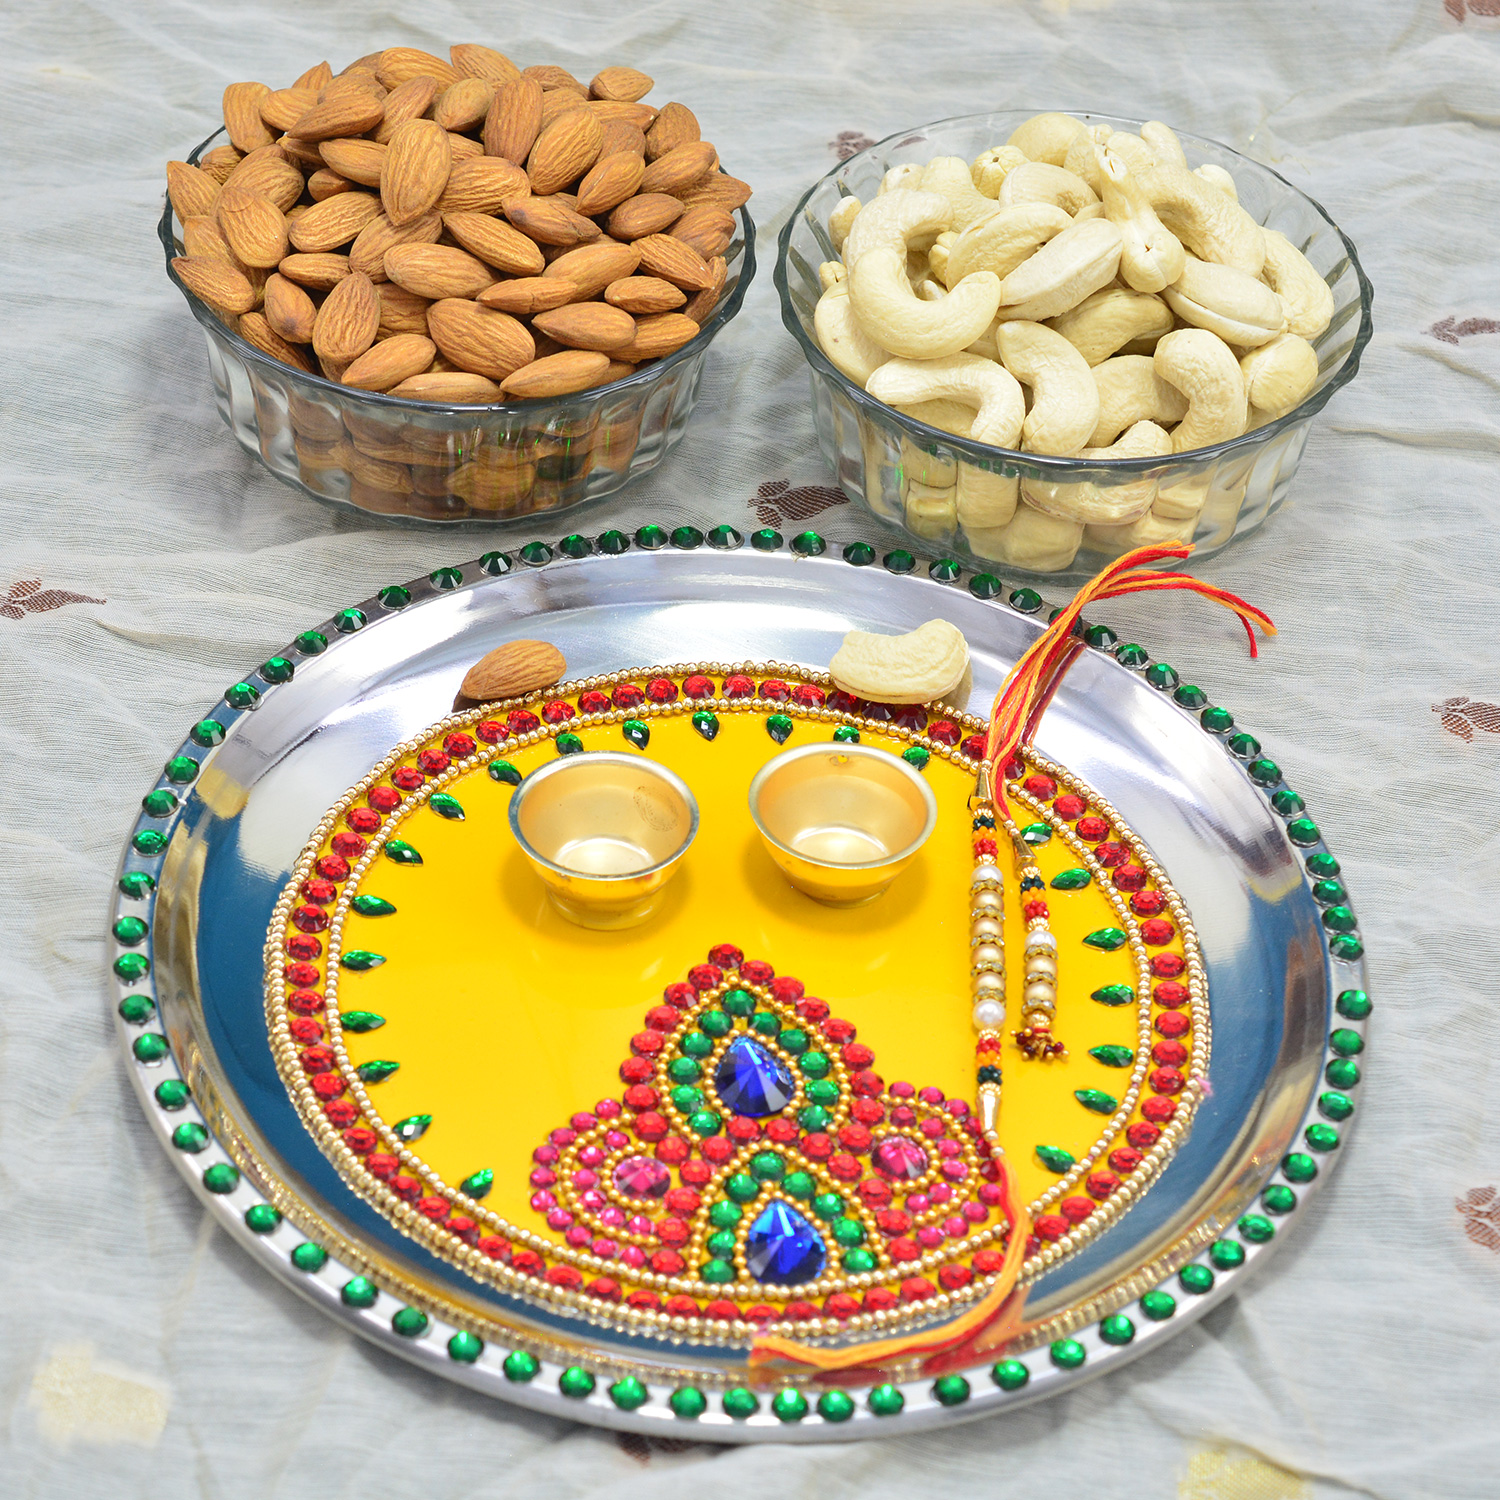 Kaju and Badam Dry Fruits with Awesome Looking Colorful Jewel Studded Rakhi Pooja Thali